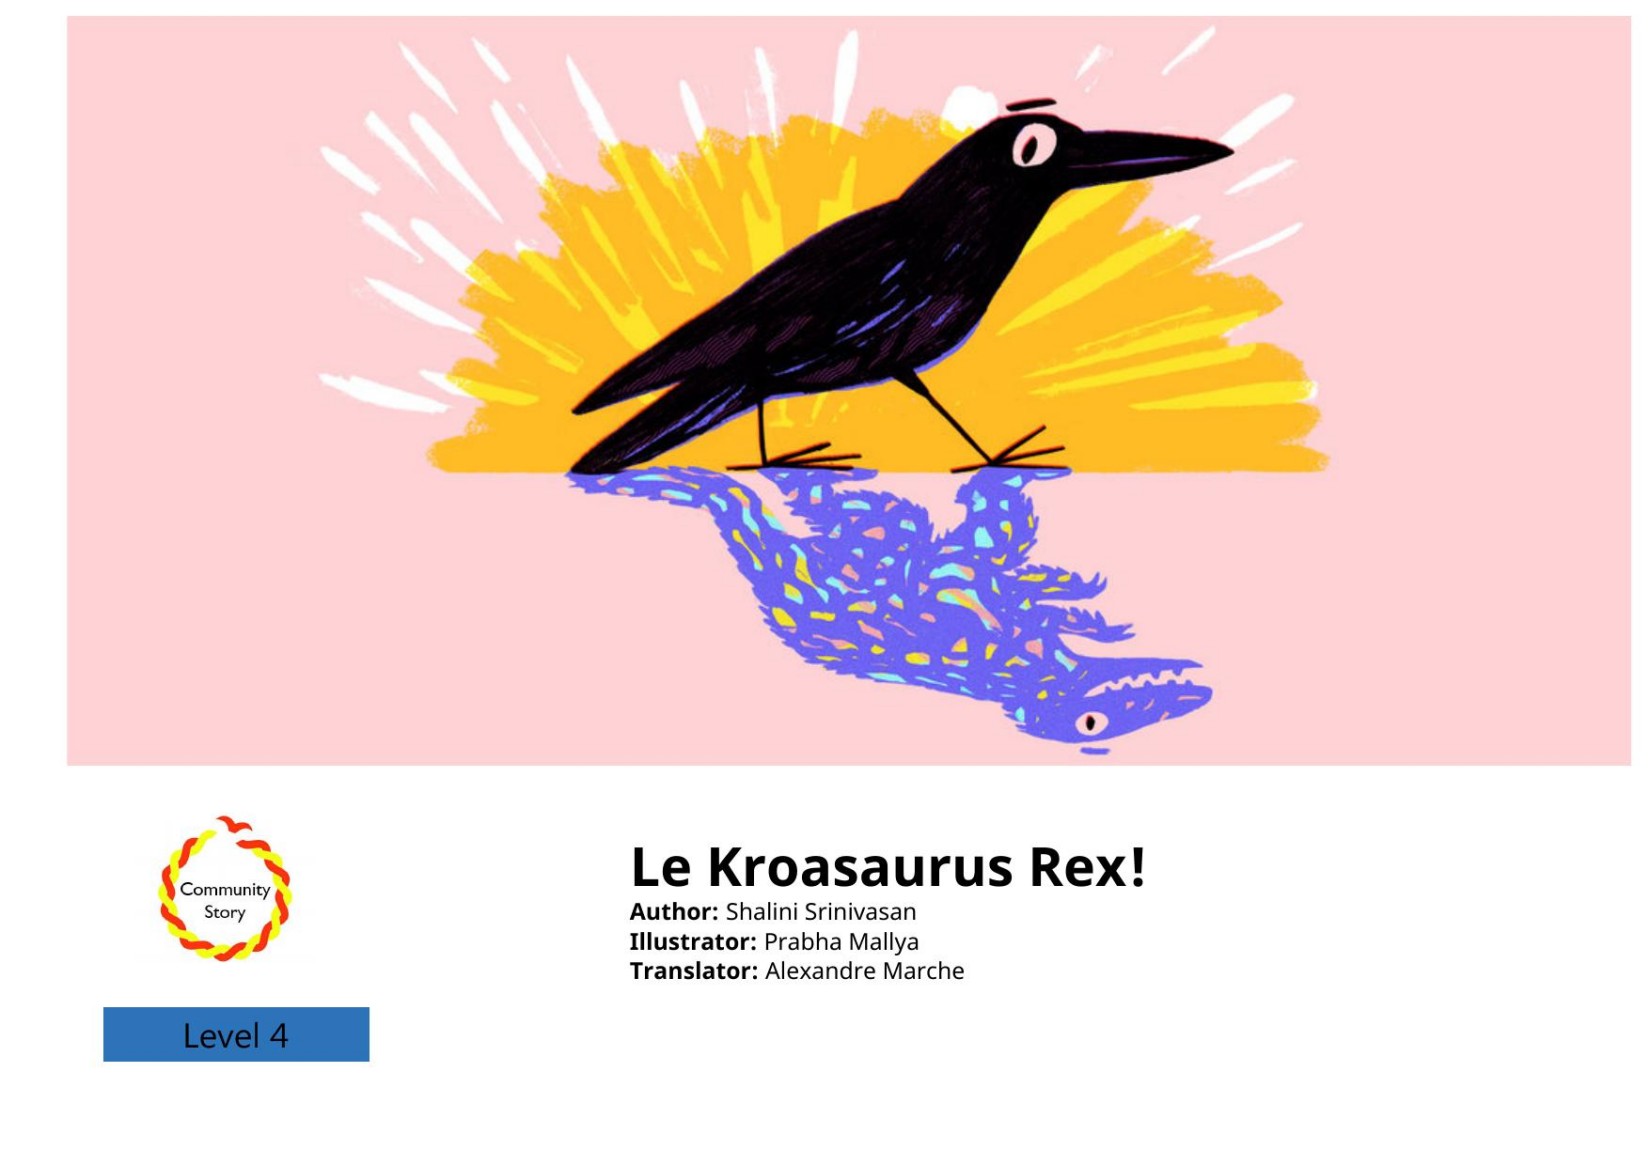 Le Kroasaurus Rex!